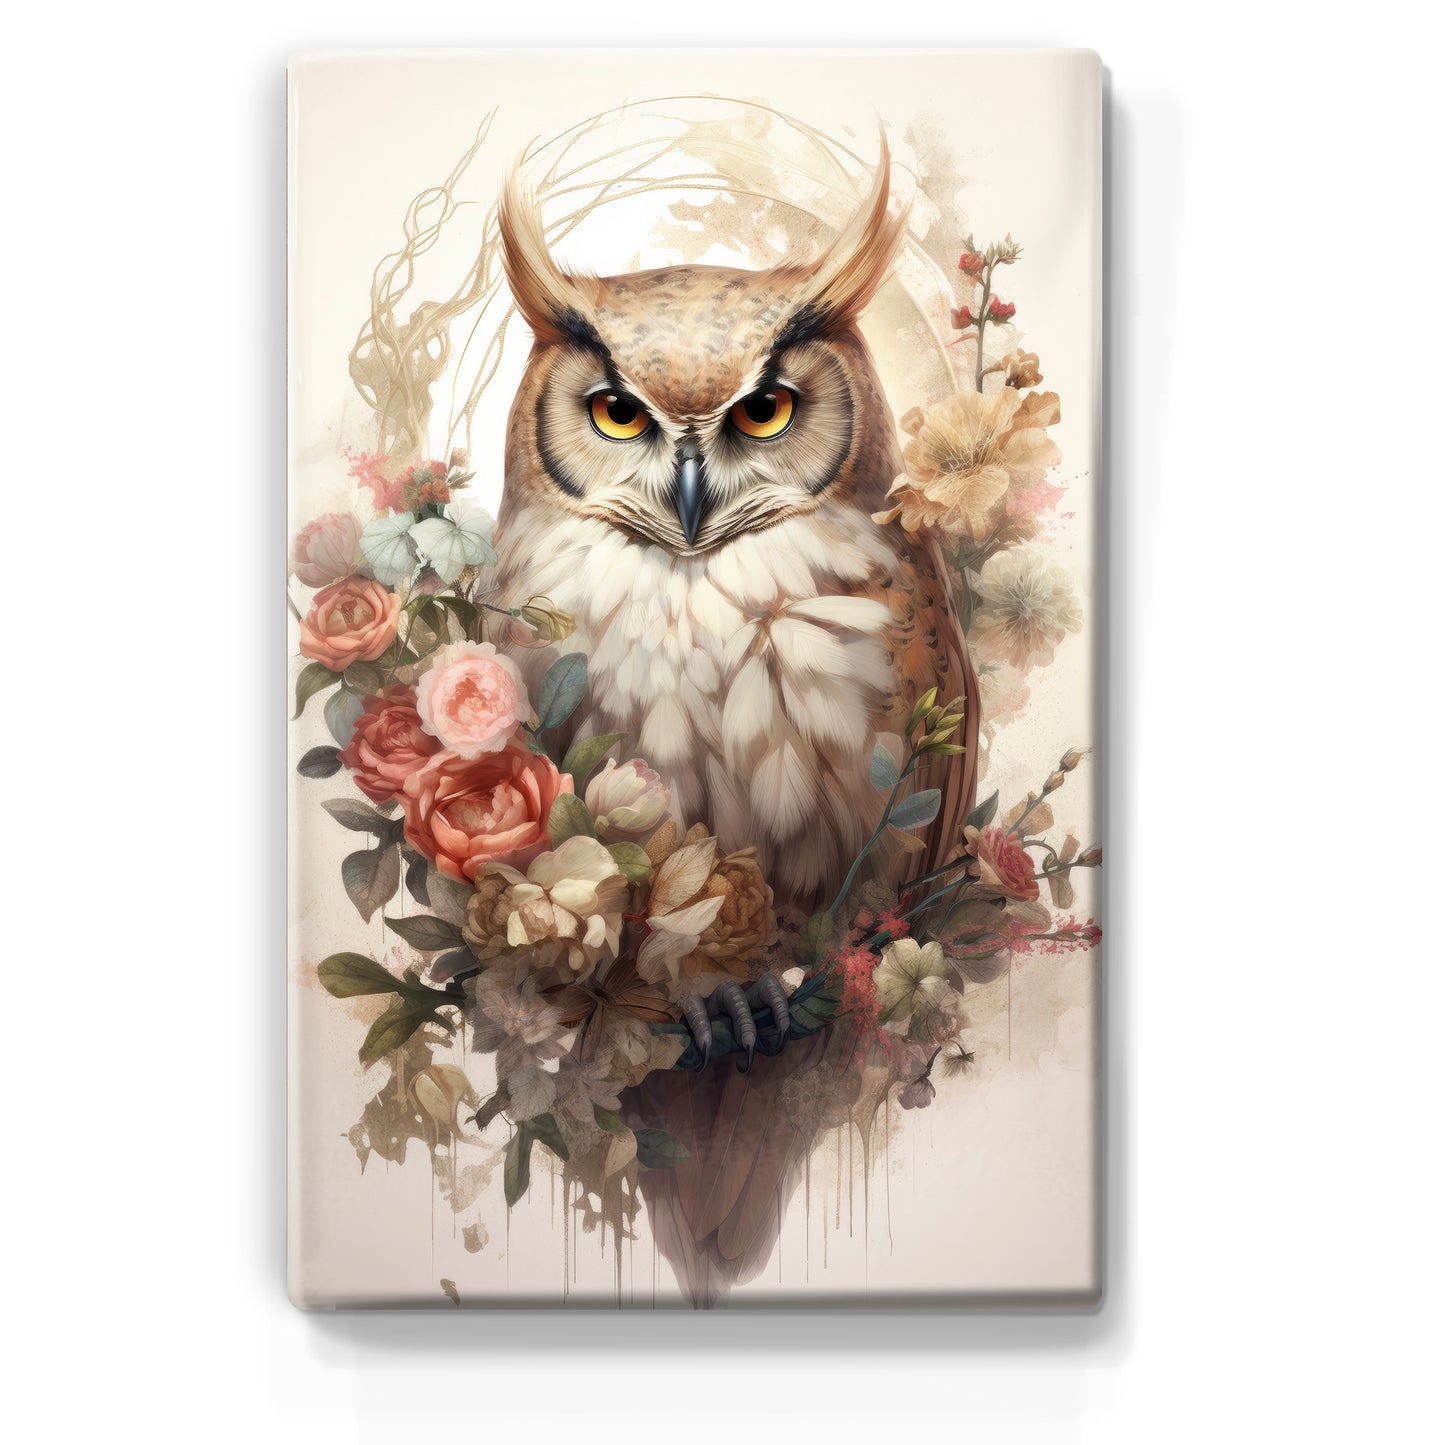 Owl with roses - Laque print - 19.5 x 30 cm - LP305